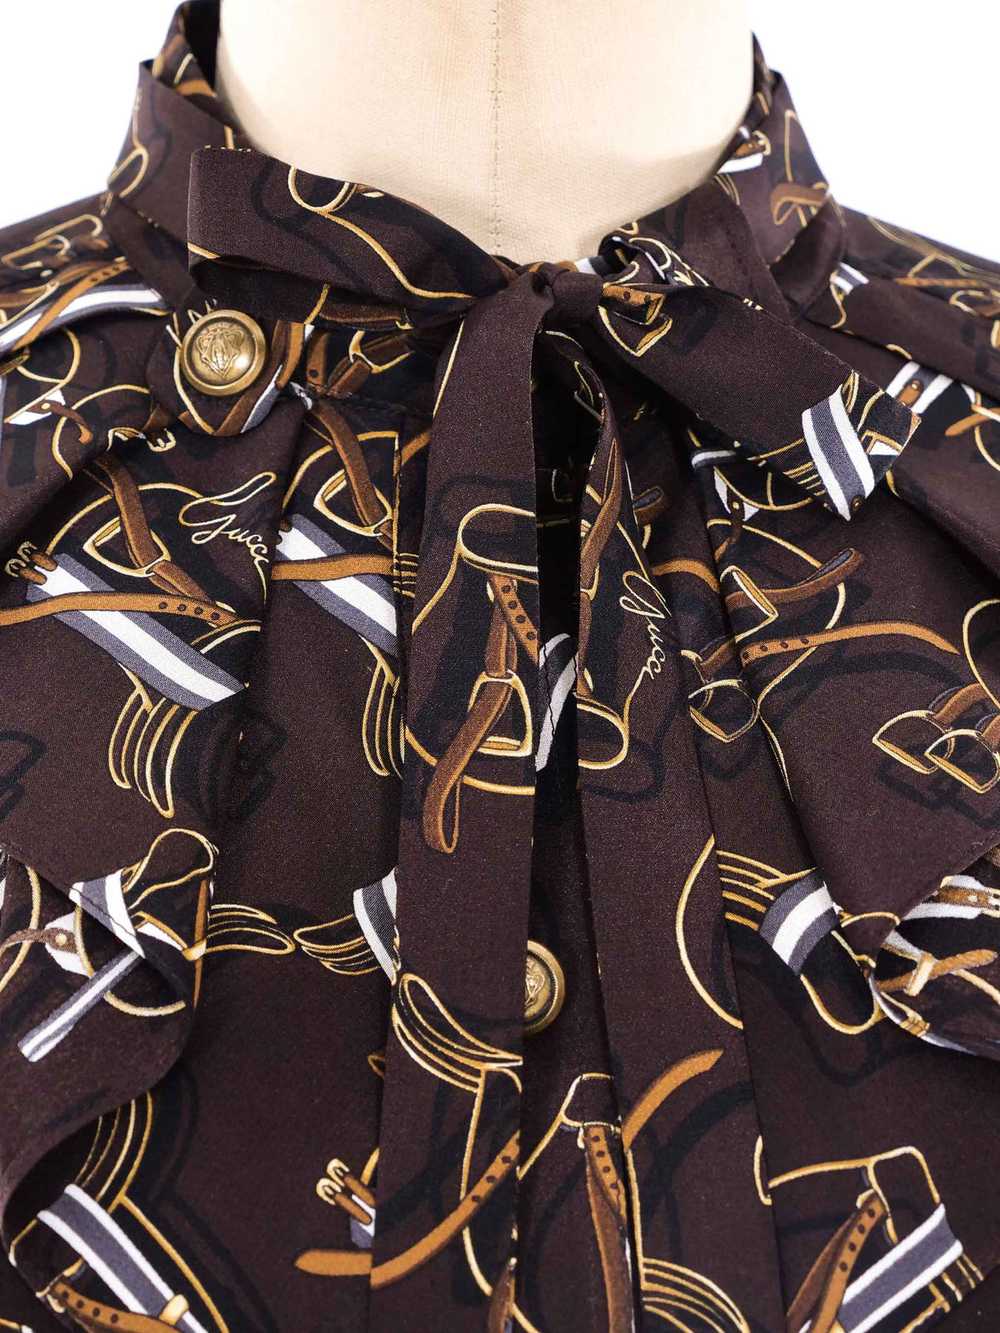 Gucci Equestrian Printed Silk Blouse - image 6